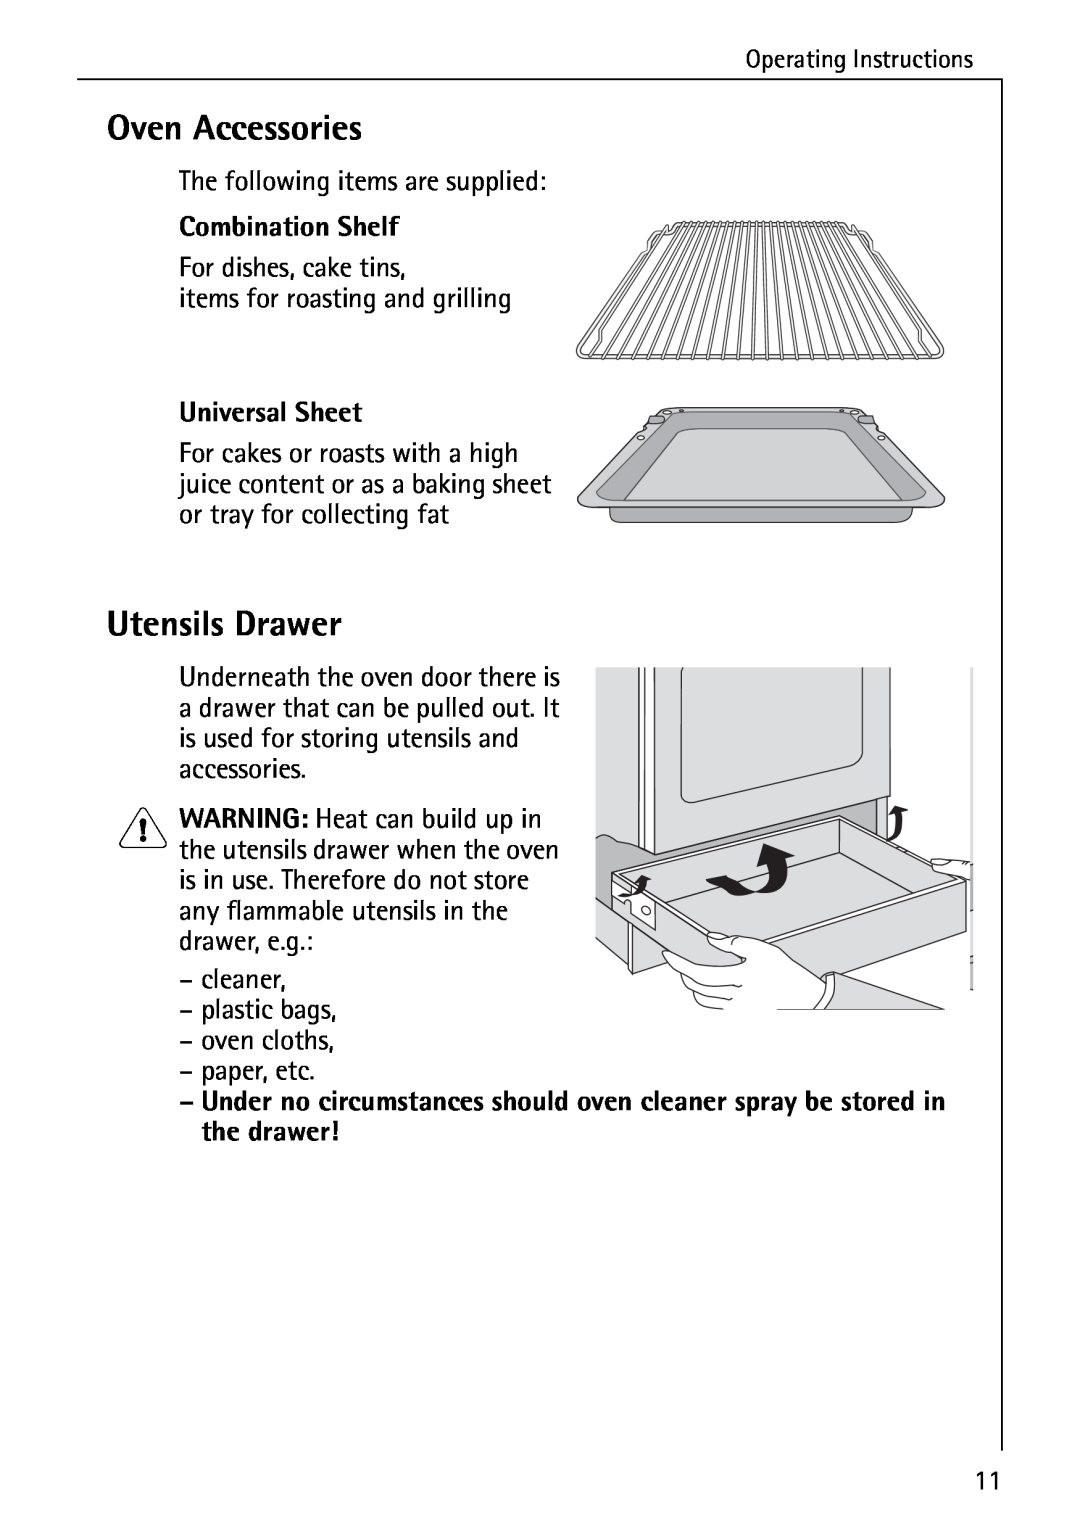 AEG 2003 F operating instructions Oven Accessories, Utensils Drawer, Combination Shelf, Universal Sheet 